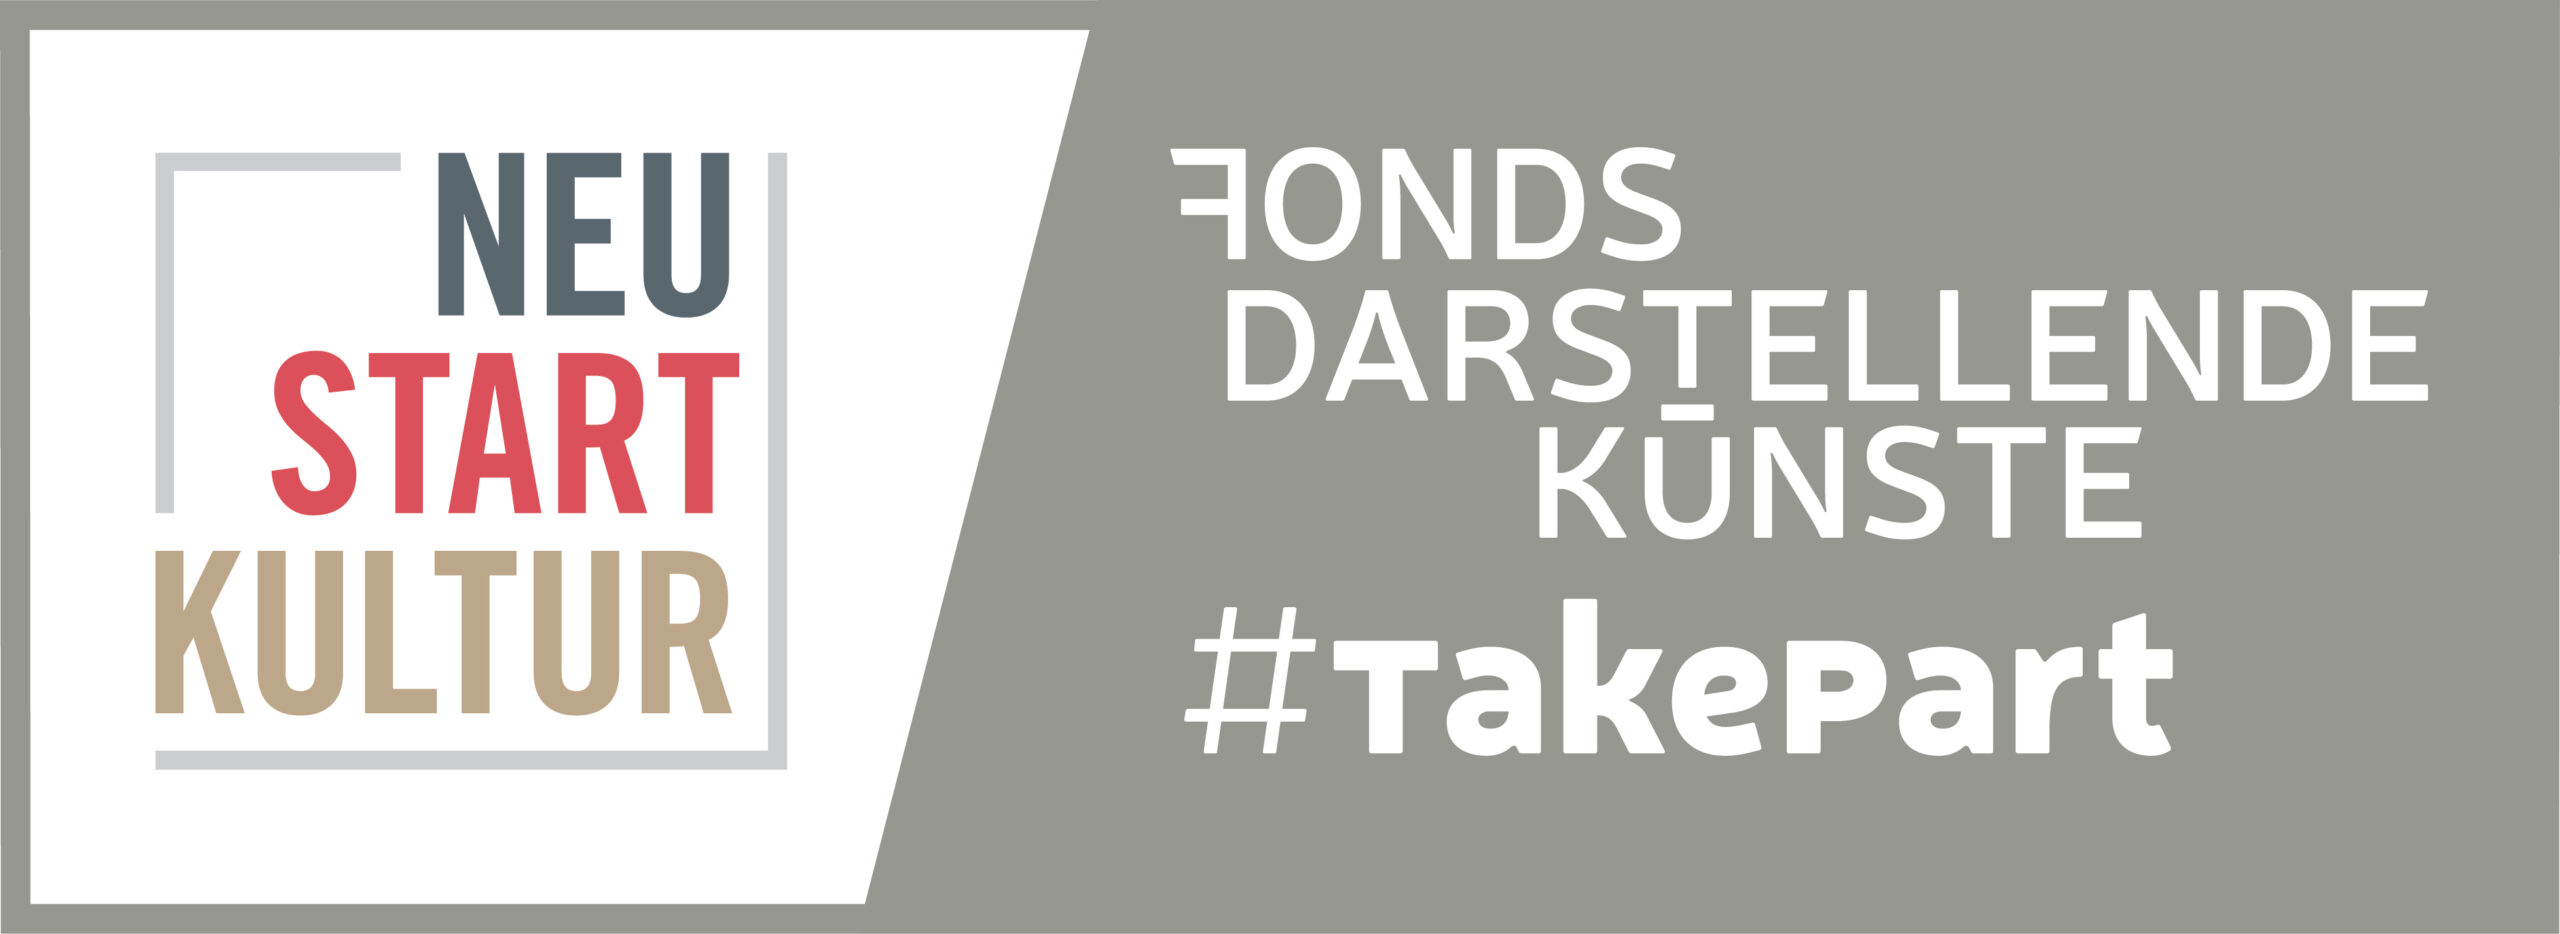 Darstellende Kunst Podcast logo Fonds Dakku Take Part DAKU_Logokombi_06-01